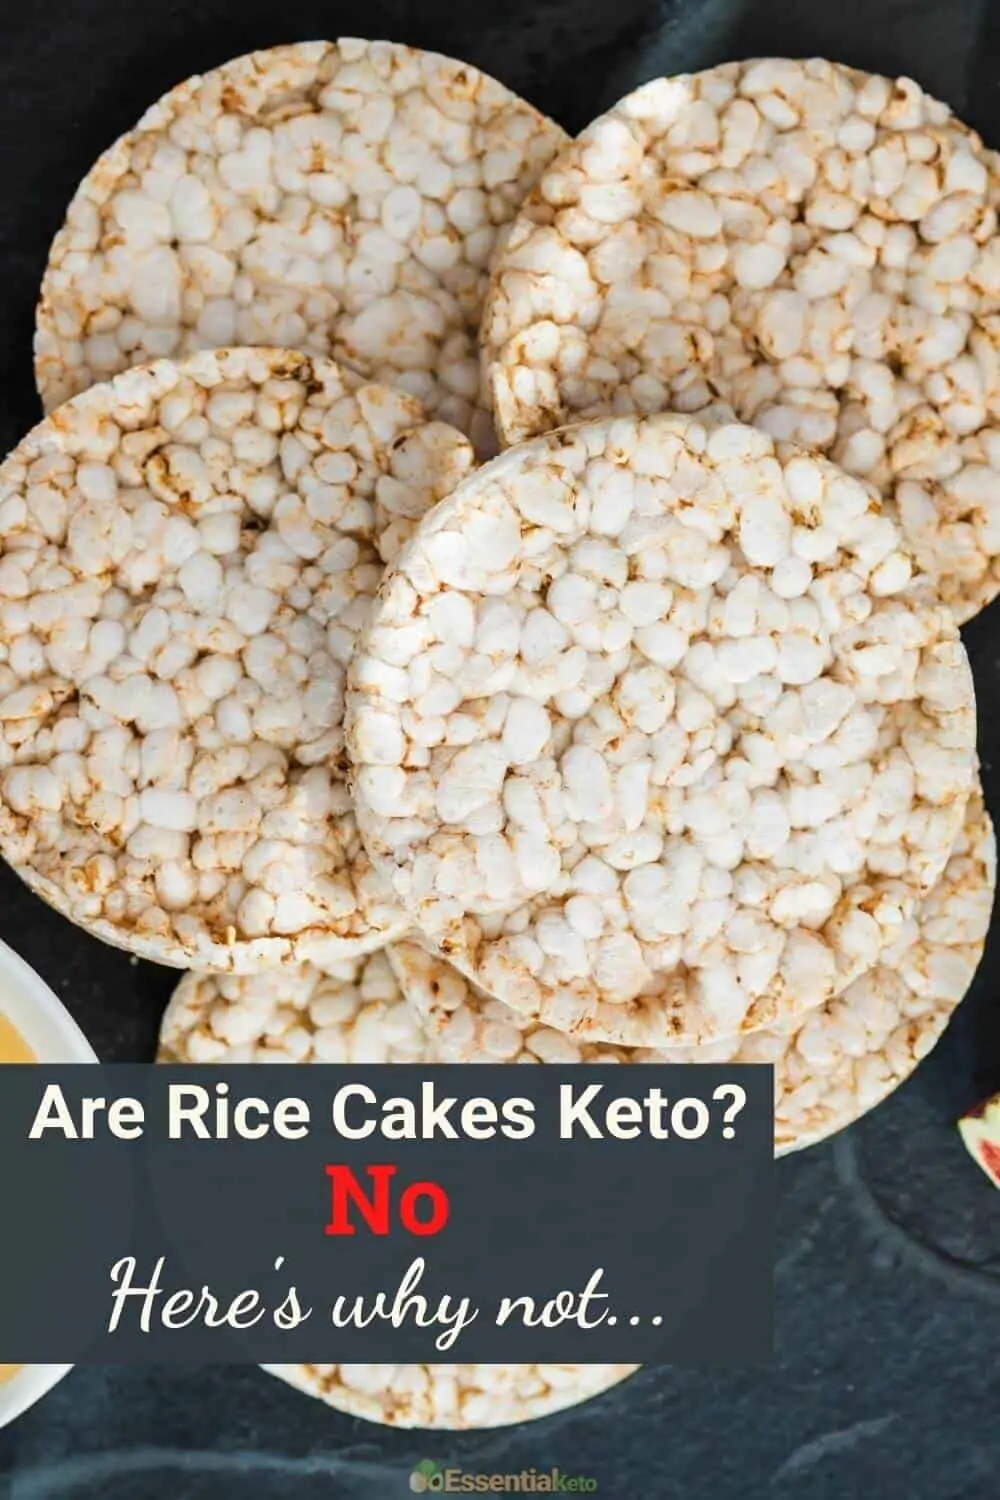 Are Rice Cakes Keto?